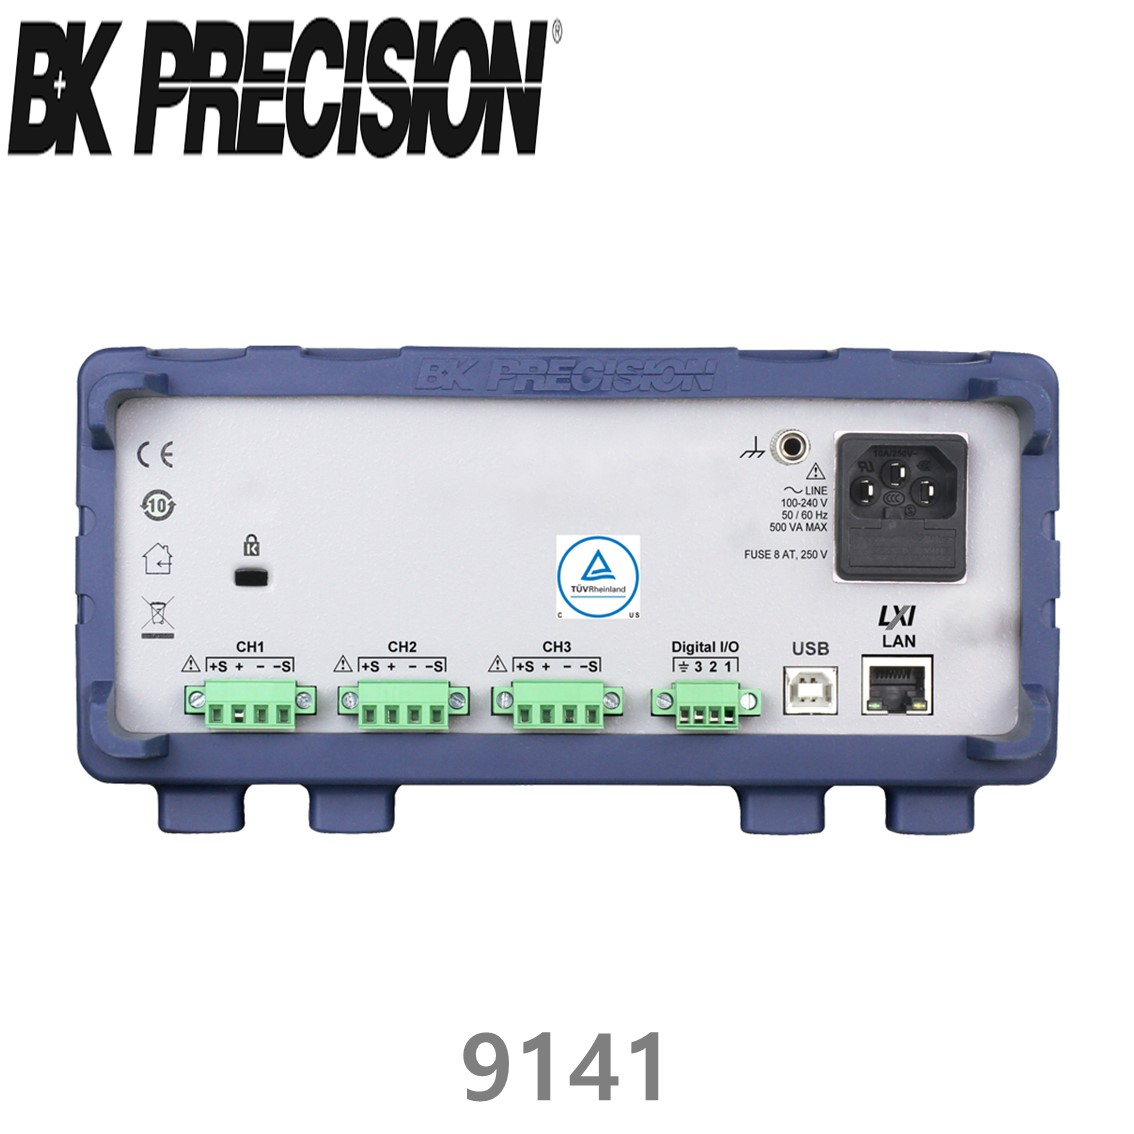 [ BK Precision ] 9141  60V/4A/300W 3채널 멀티레인지 DC전원공급장치